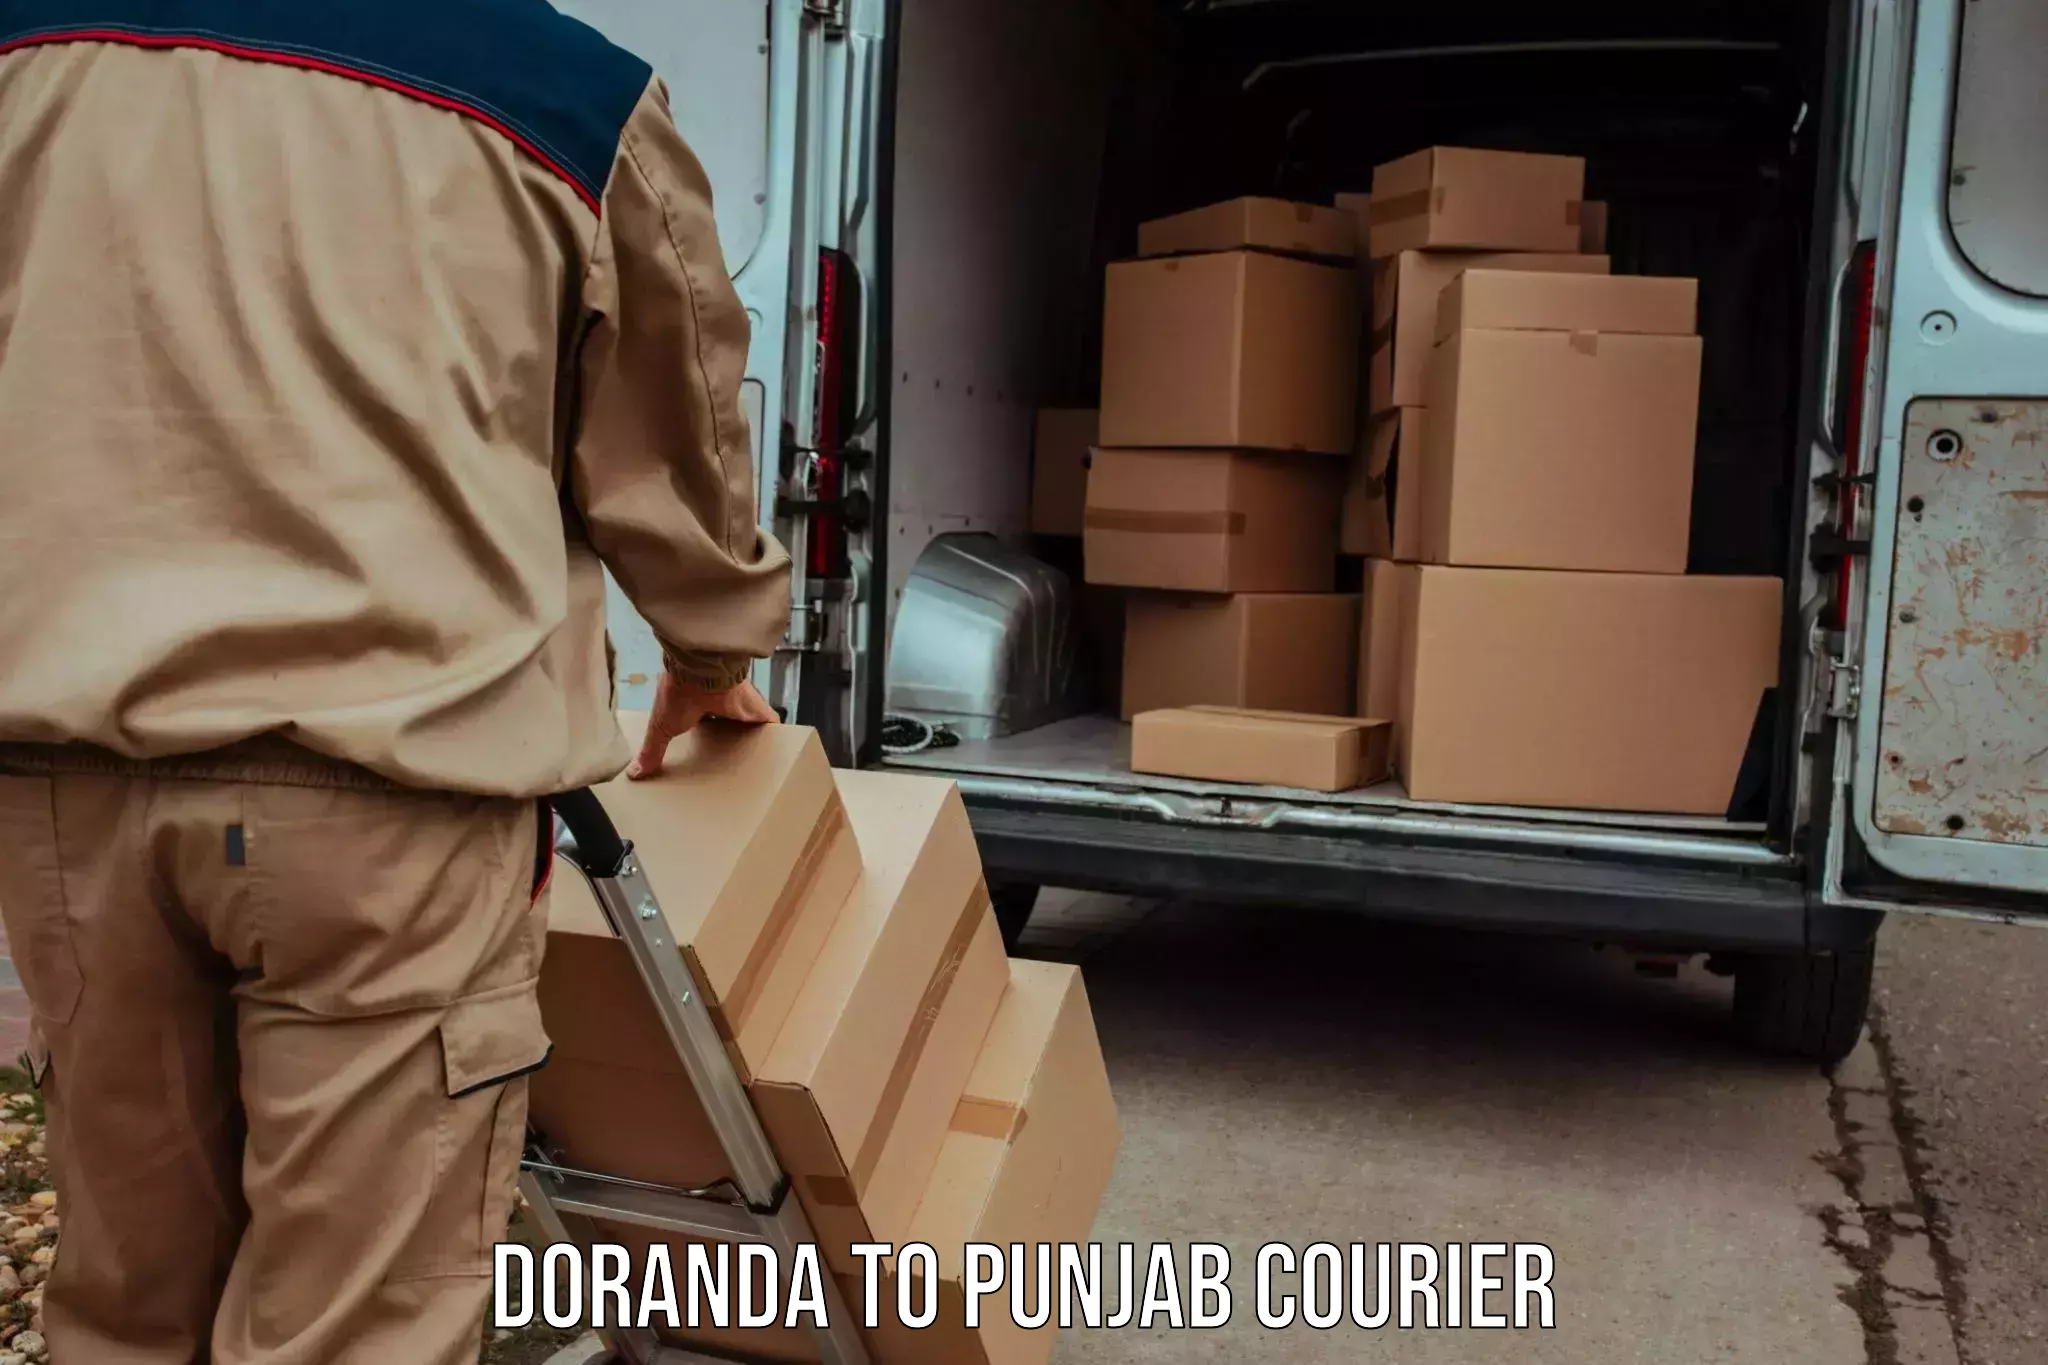 Full-service courier options Doranda to Punjab